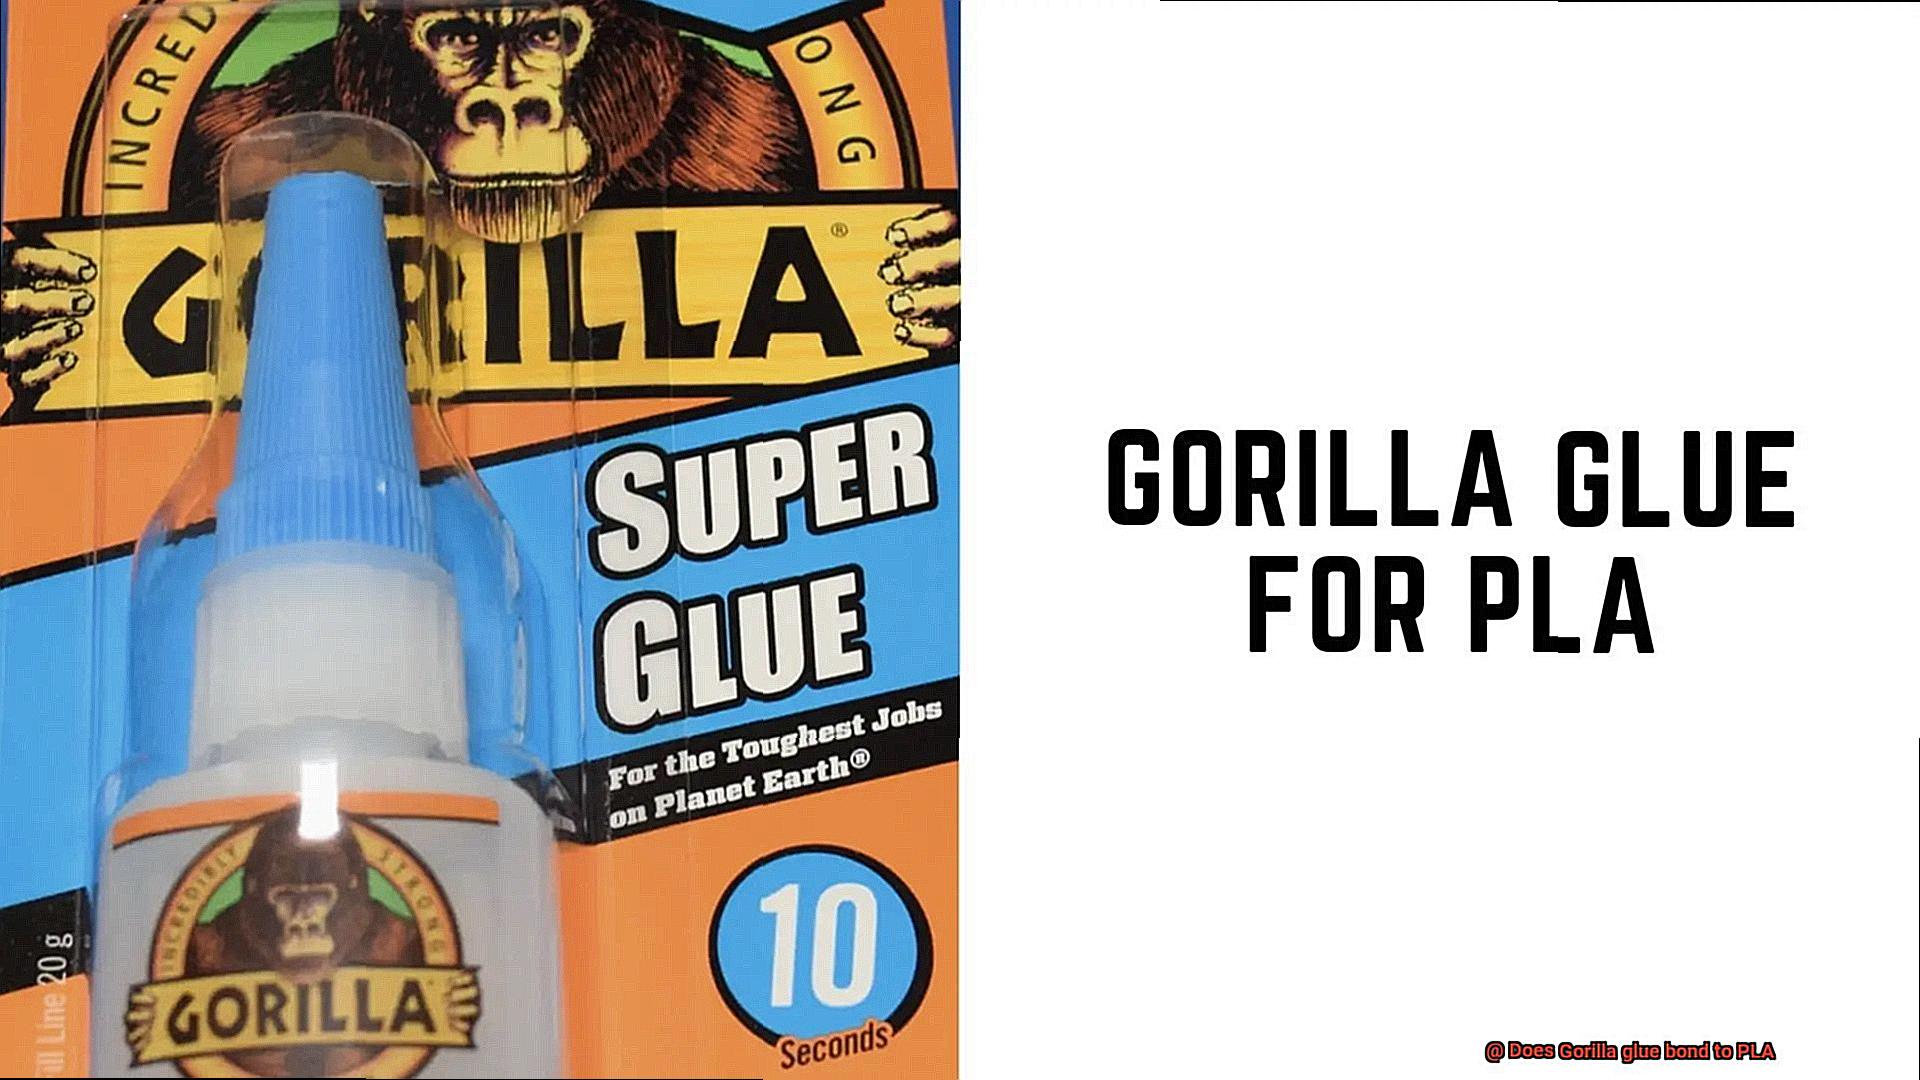 Does Gorilla glue bond to PLA-7